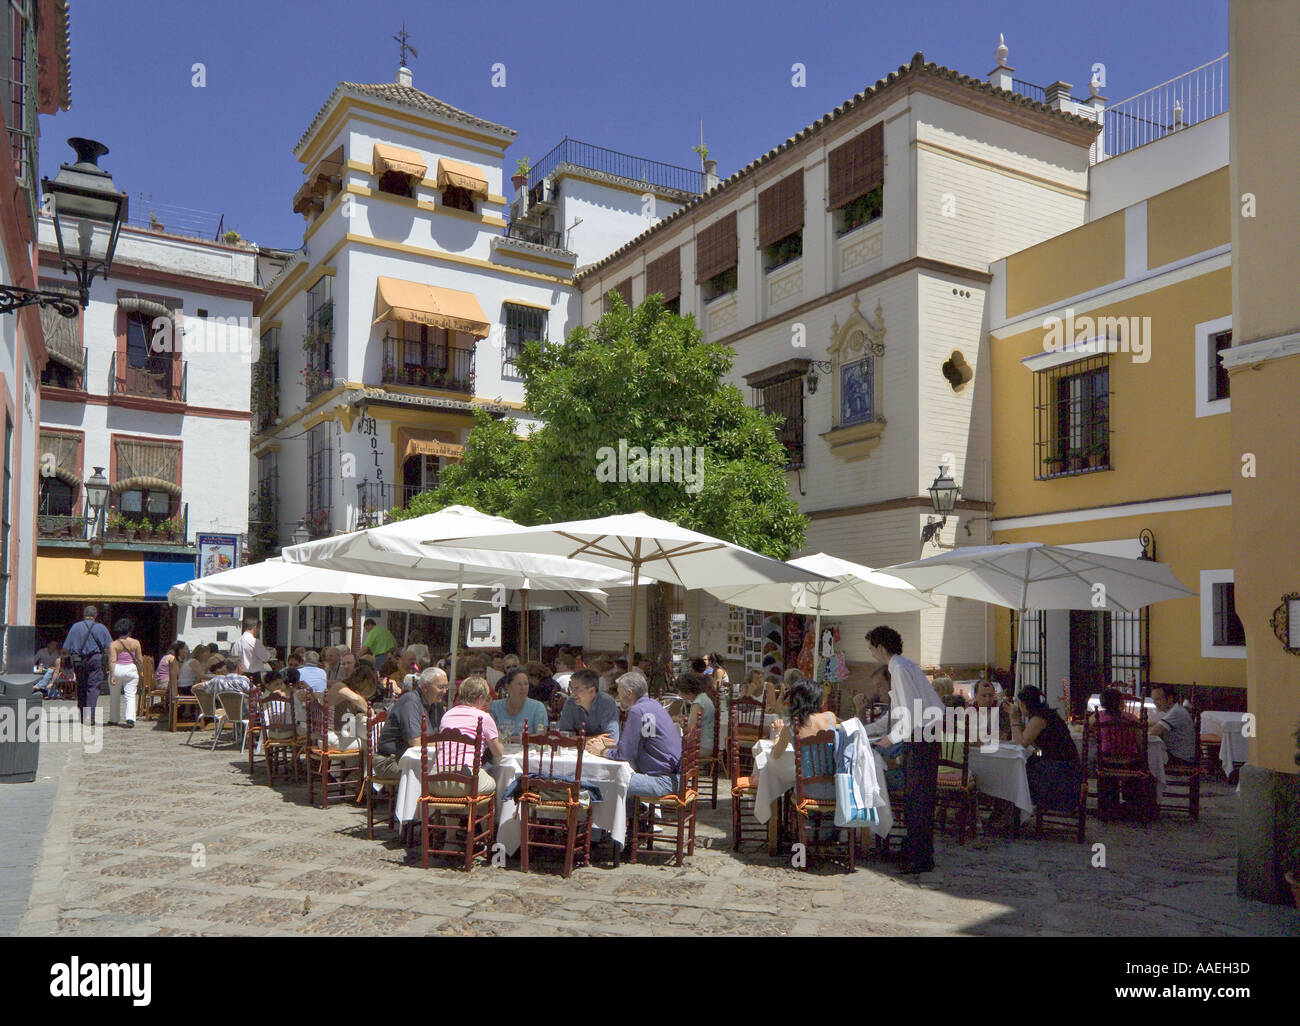 Straße Restaurant am Mittag, Plaza de Los gekommen, Barrio Santa Cruz in Sevilla Andalusien, Spanien Stockfoto